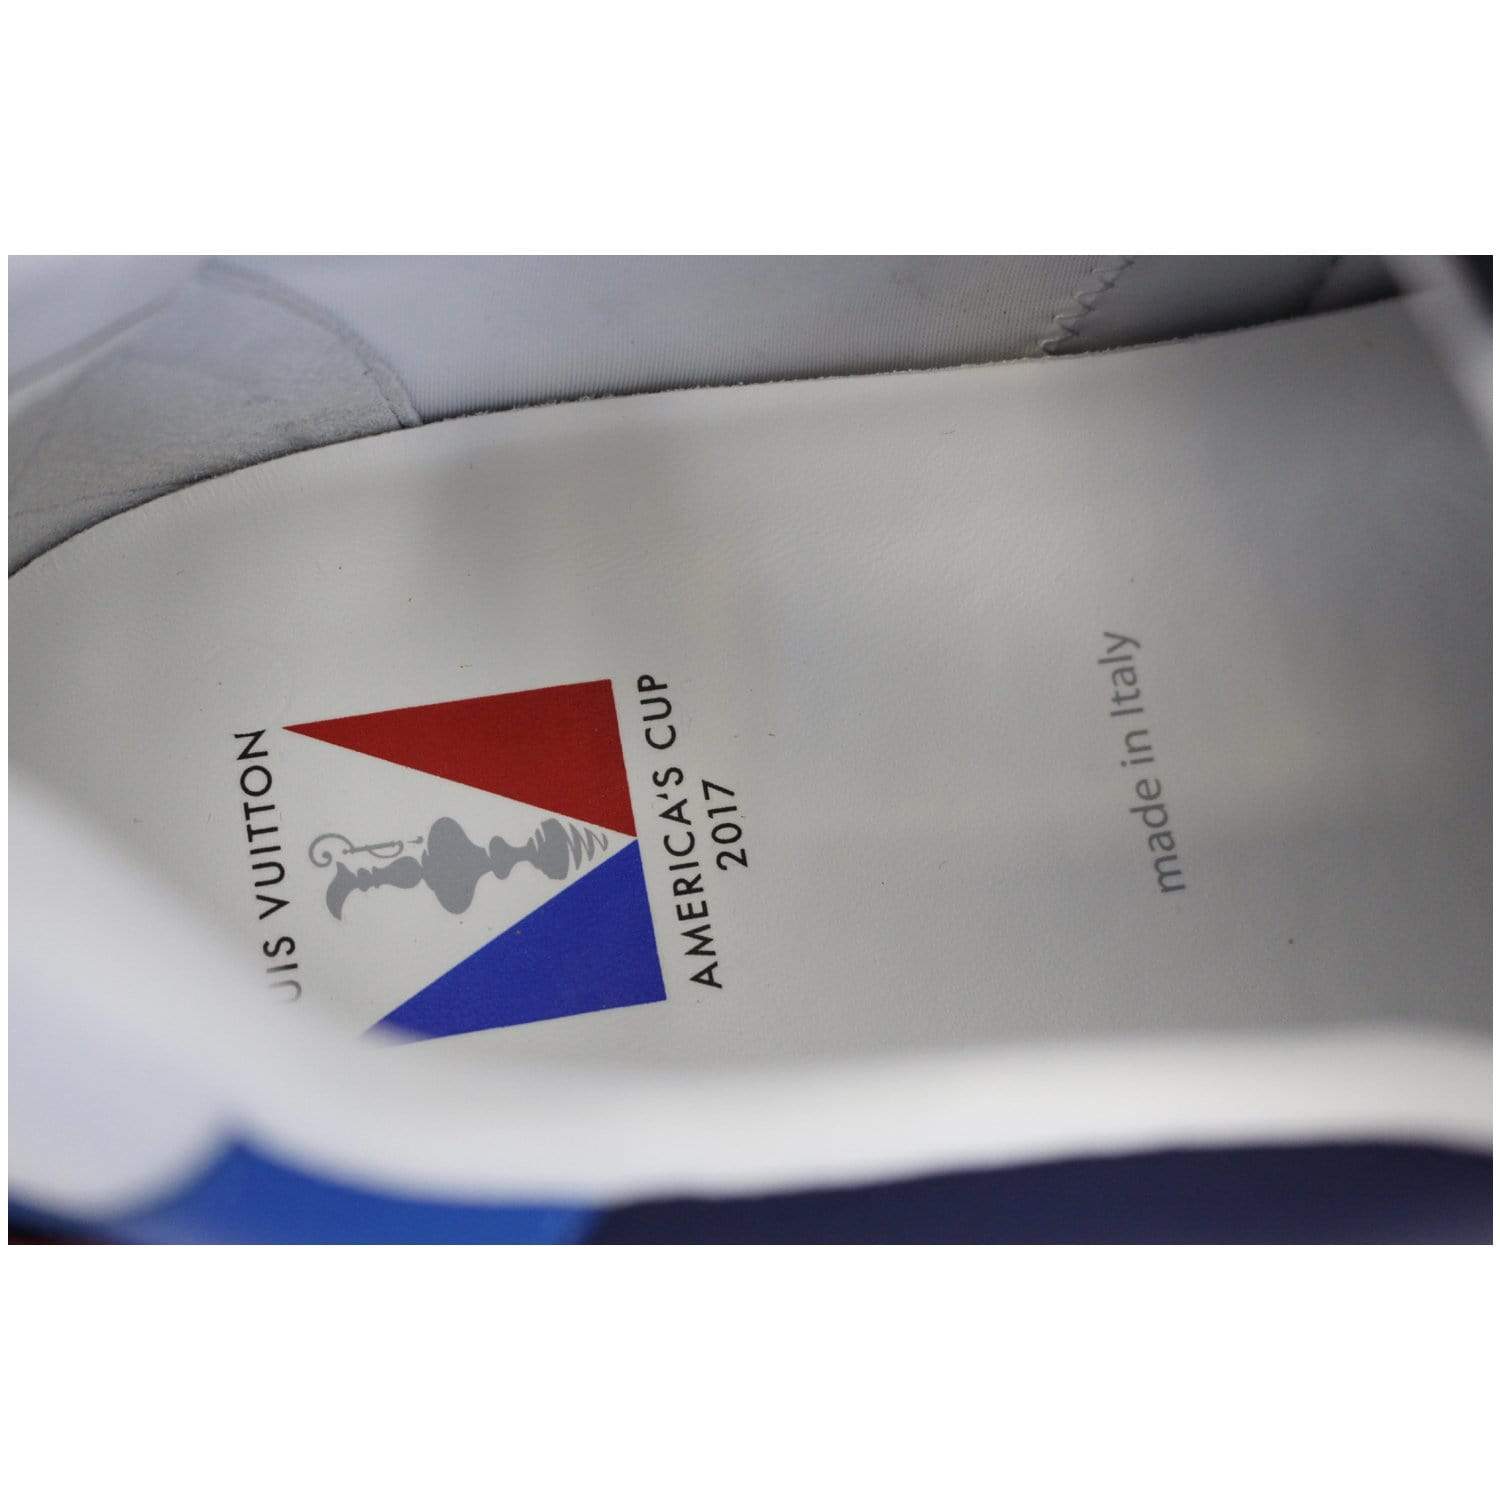 Louis Vuitton #263 AMERICANS CUP REGATTA 2017 Low cut sneakers white